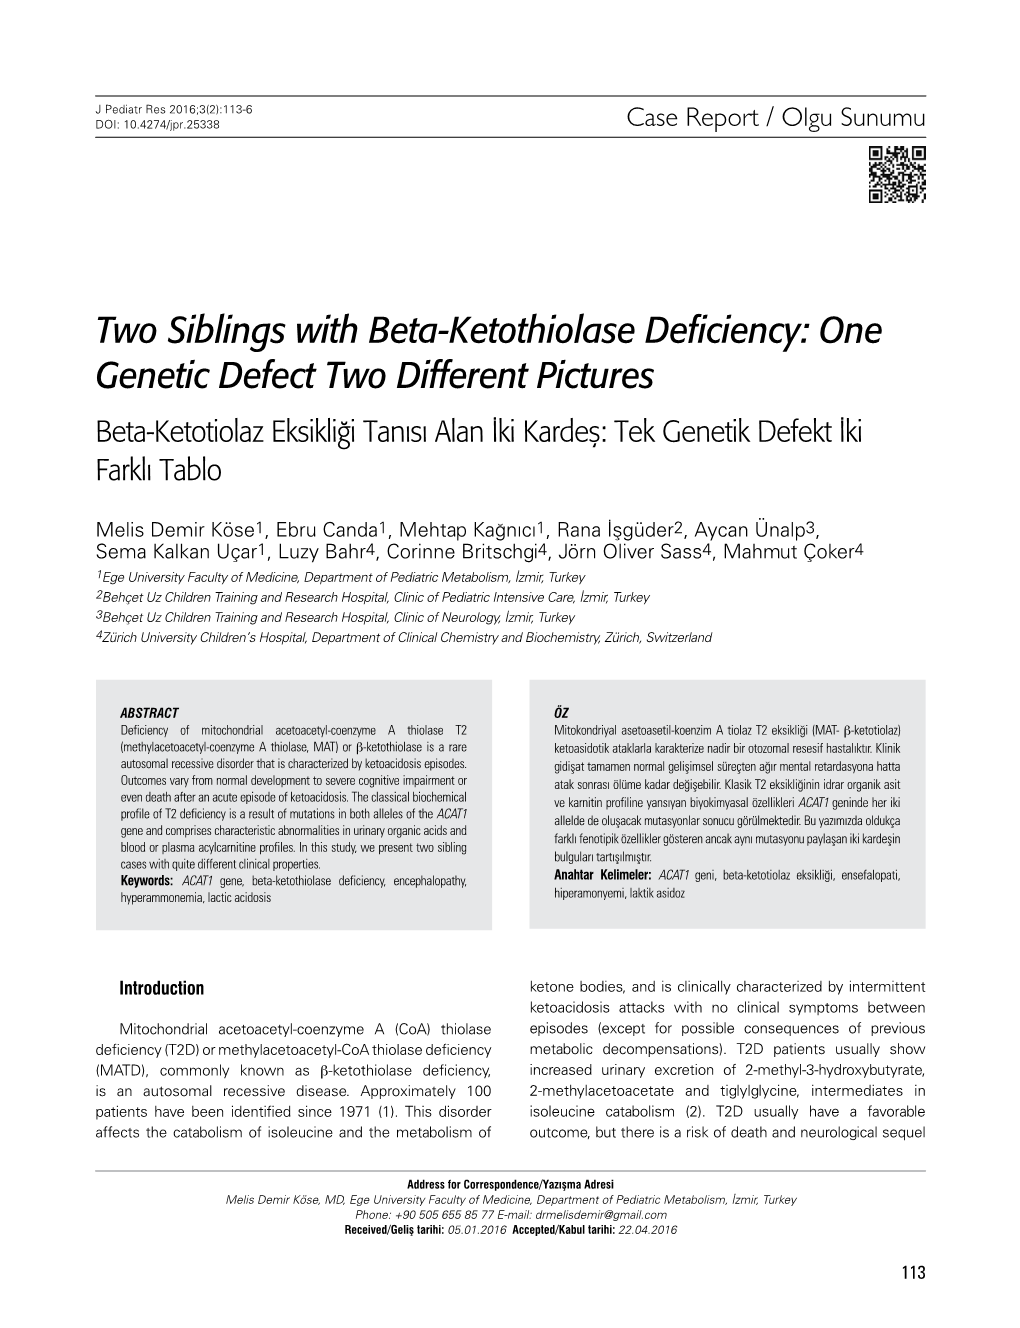 Two Siblings with Beta-Ketothiolase Deficiency: One Genetic Defect Two